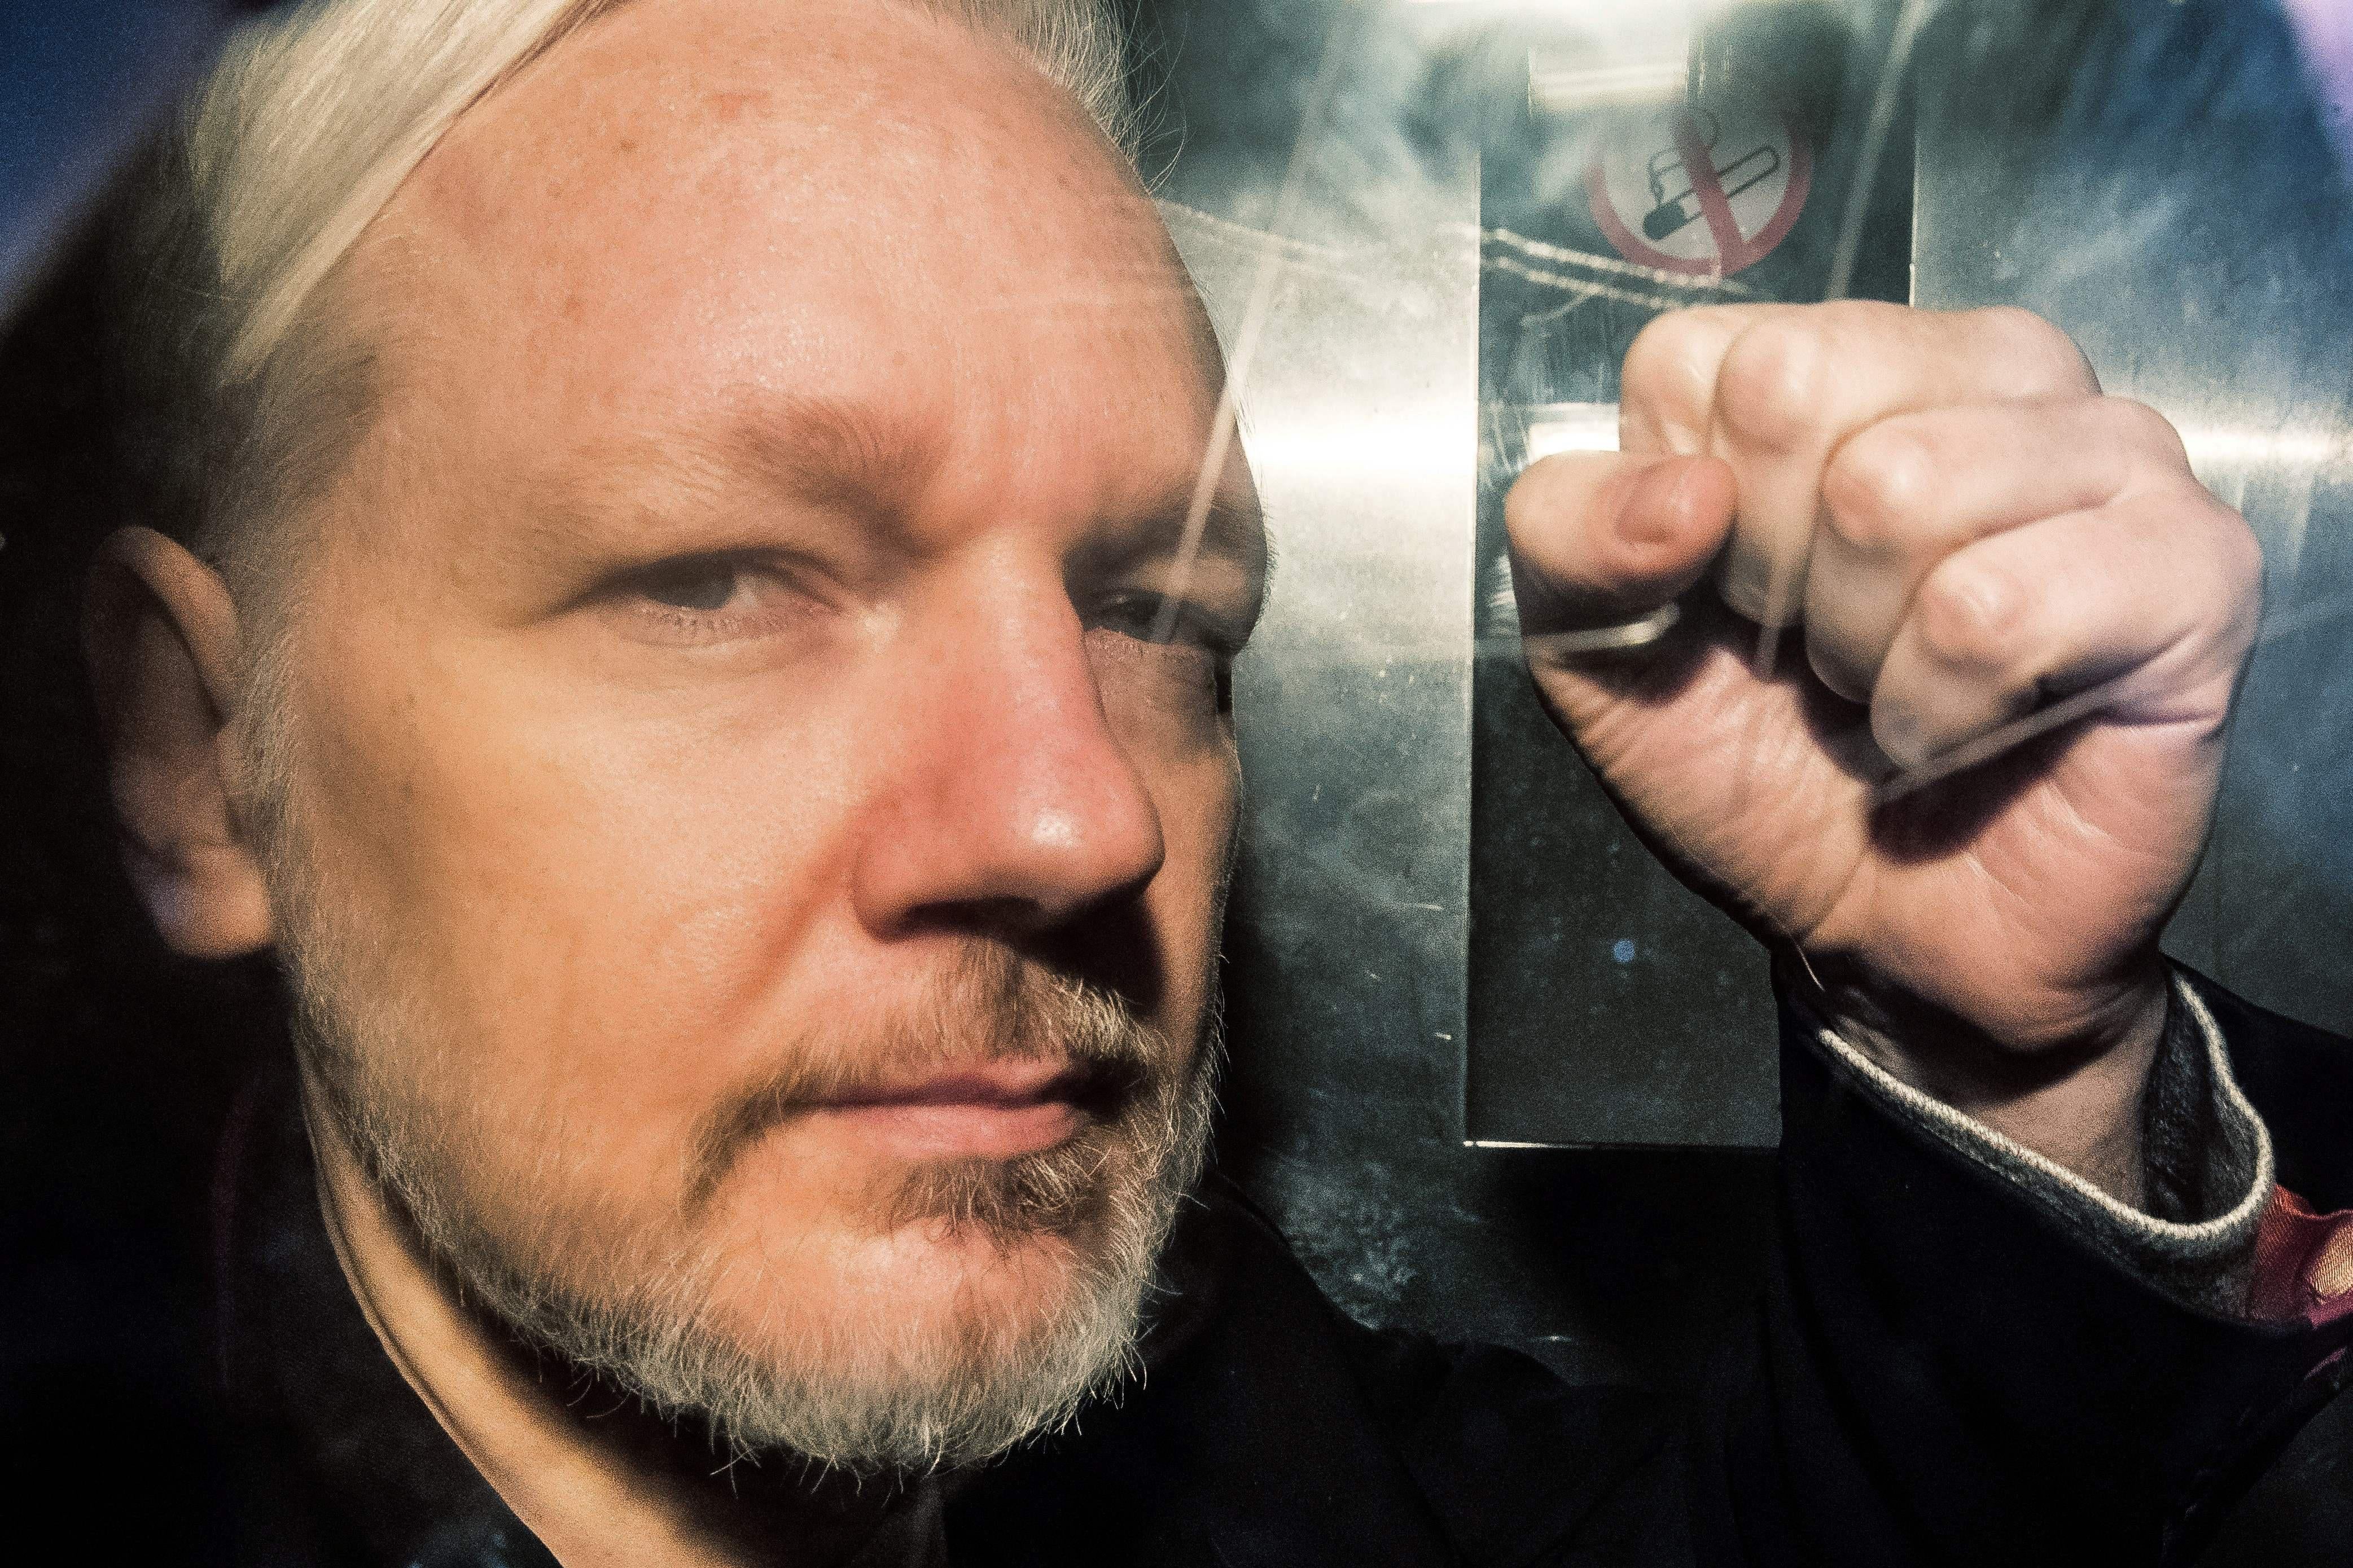 WikiLeaks founder Julian Assange gestures from the window of a prison van.